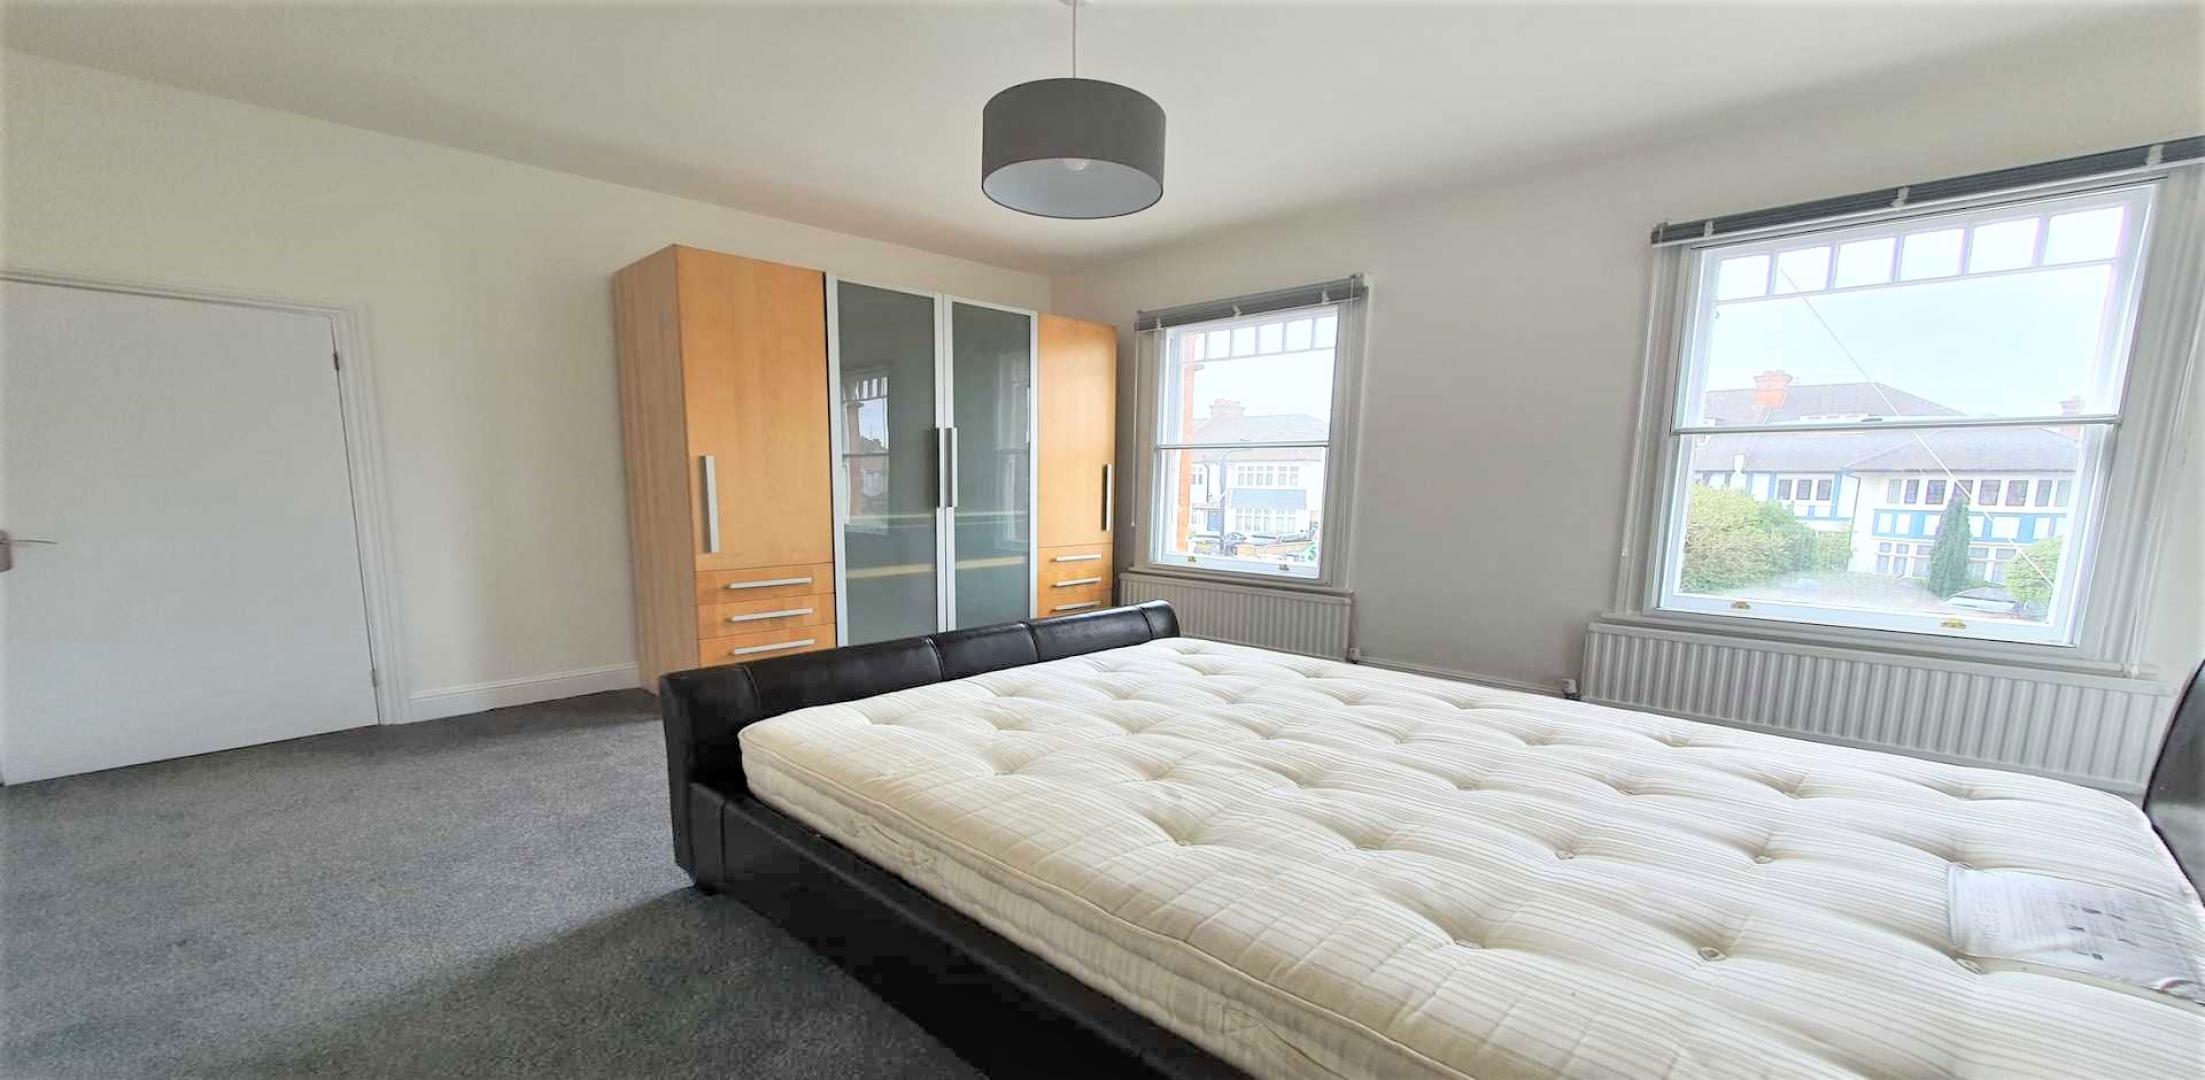 			1 Bedroom, 1 bath, 1 reception Flat			 St Gabriels Road, WILLESDEN GREEN